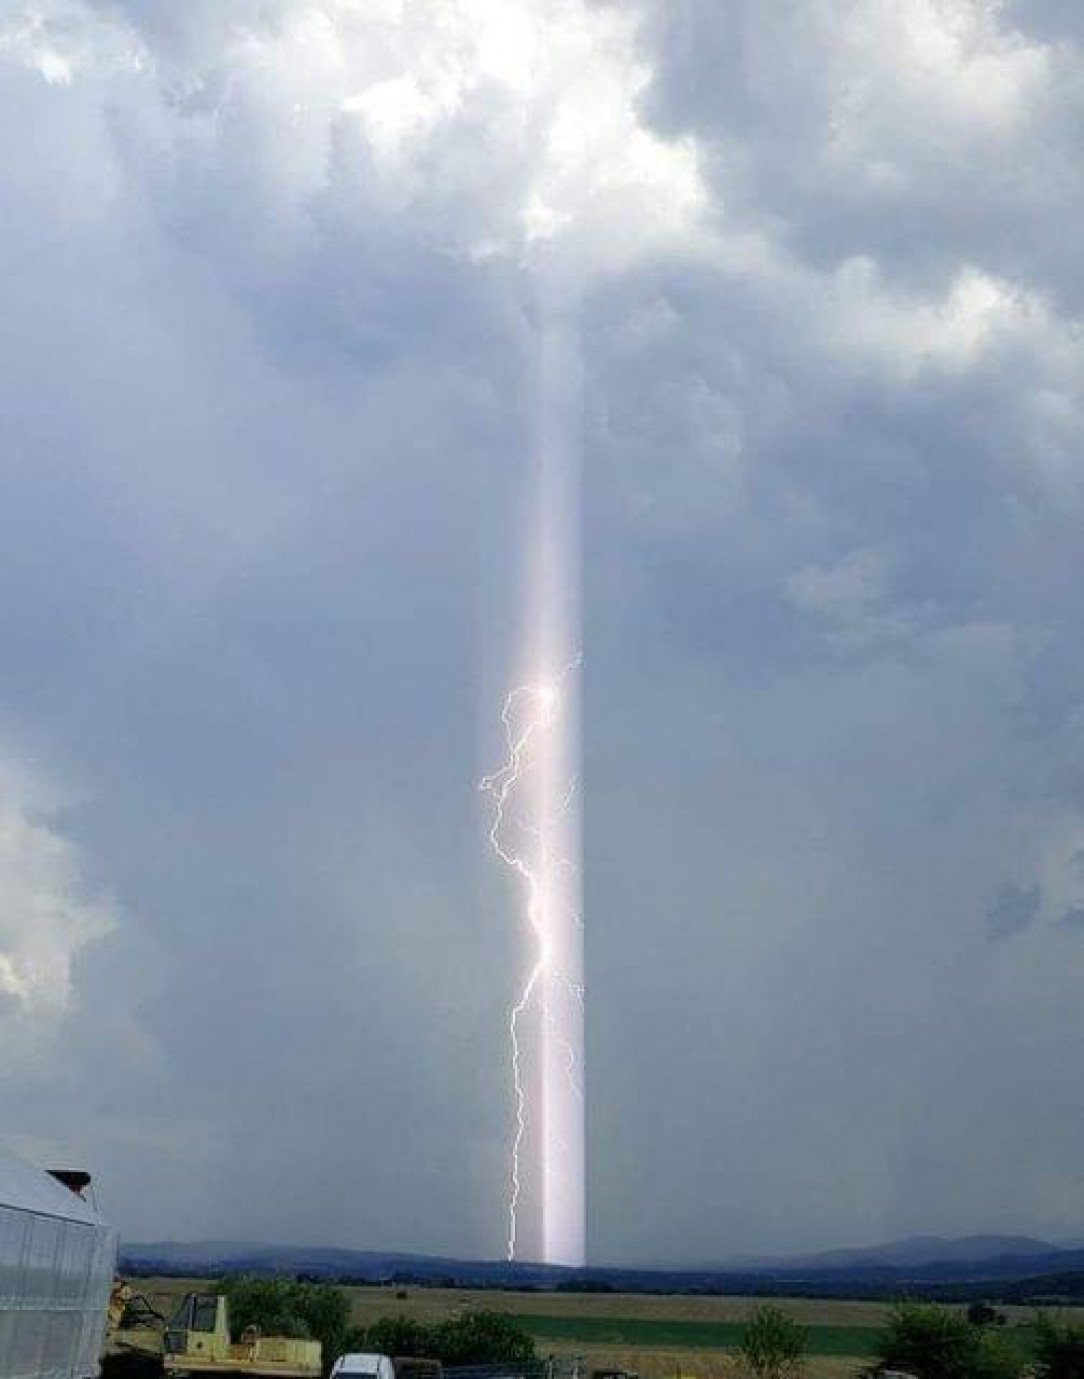 Pillar of Light captured today in Greece